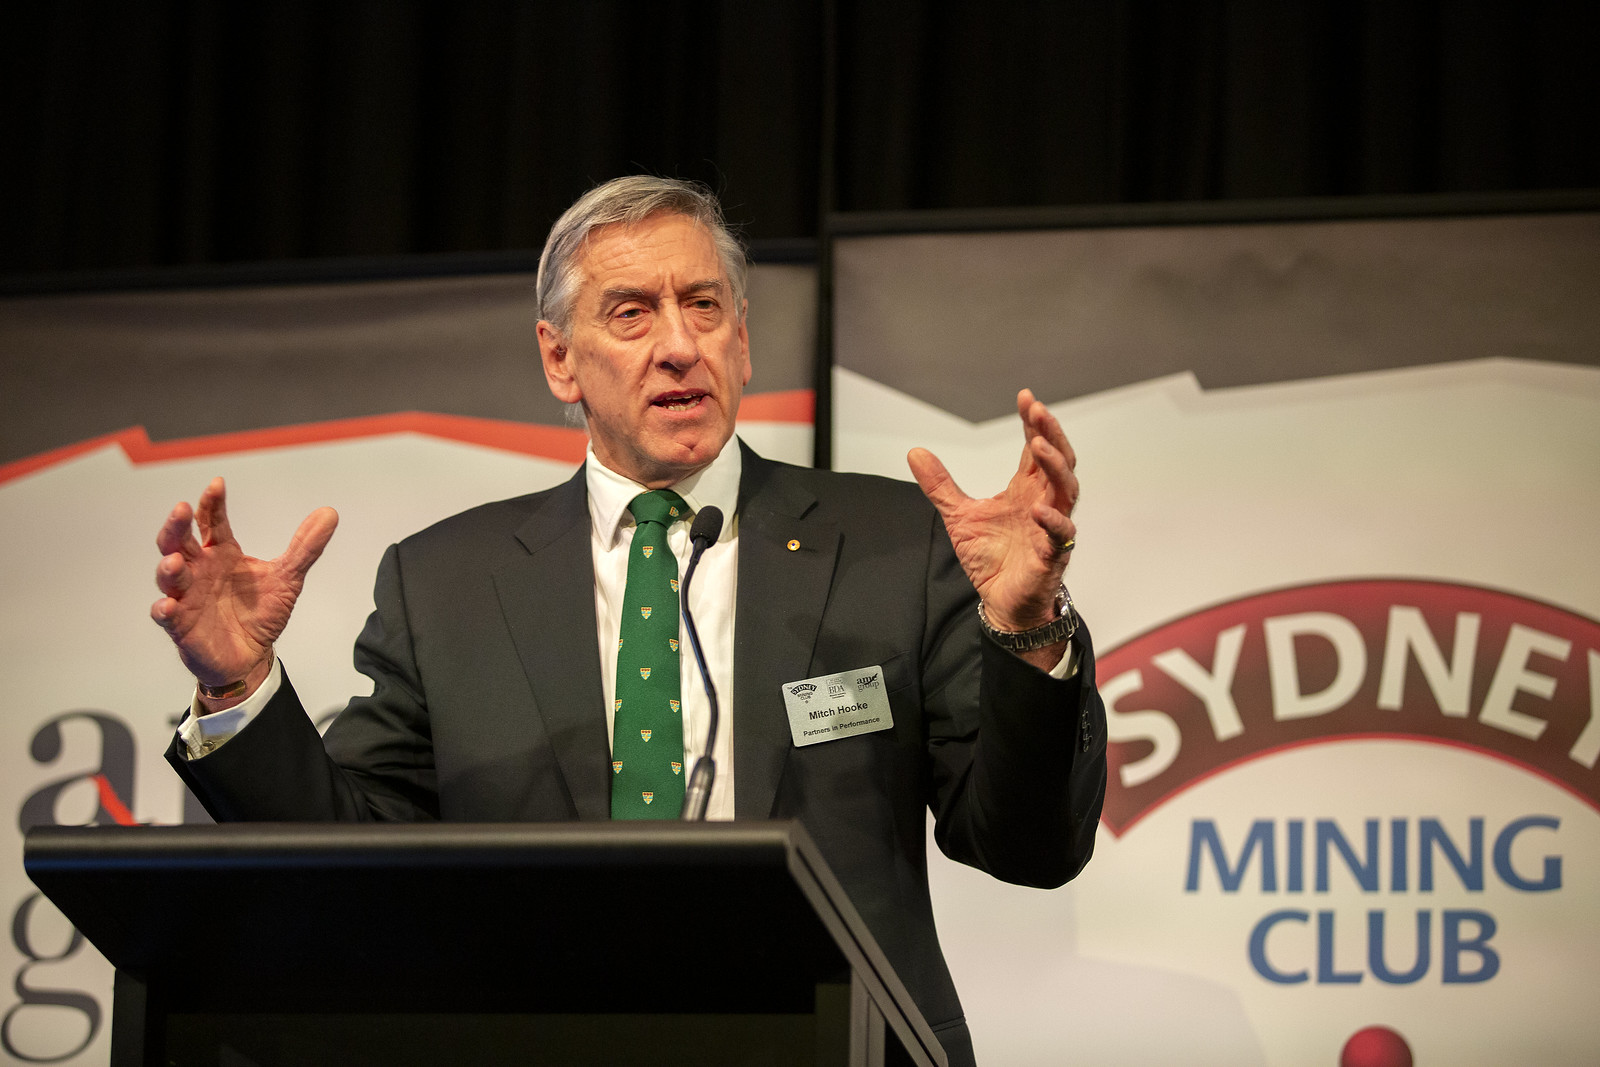 Sydney Mining Club Event – June 2022